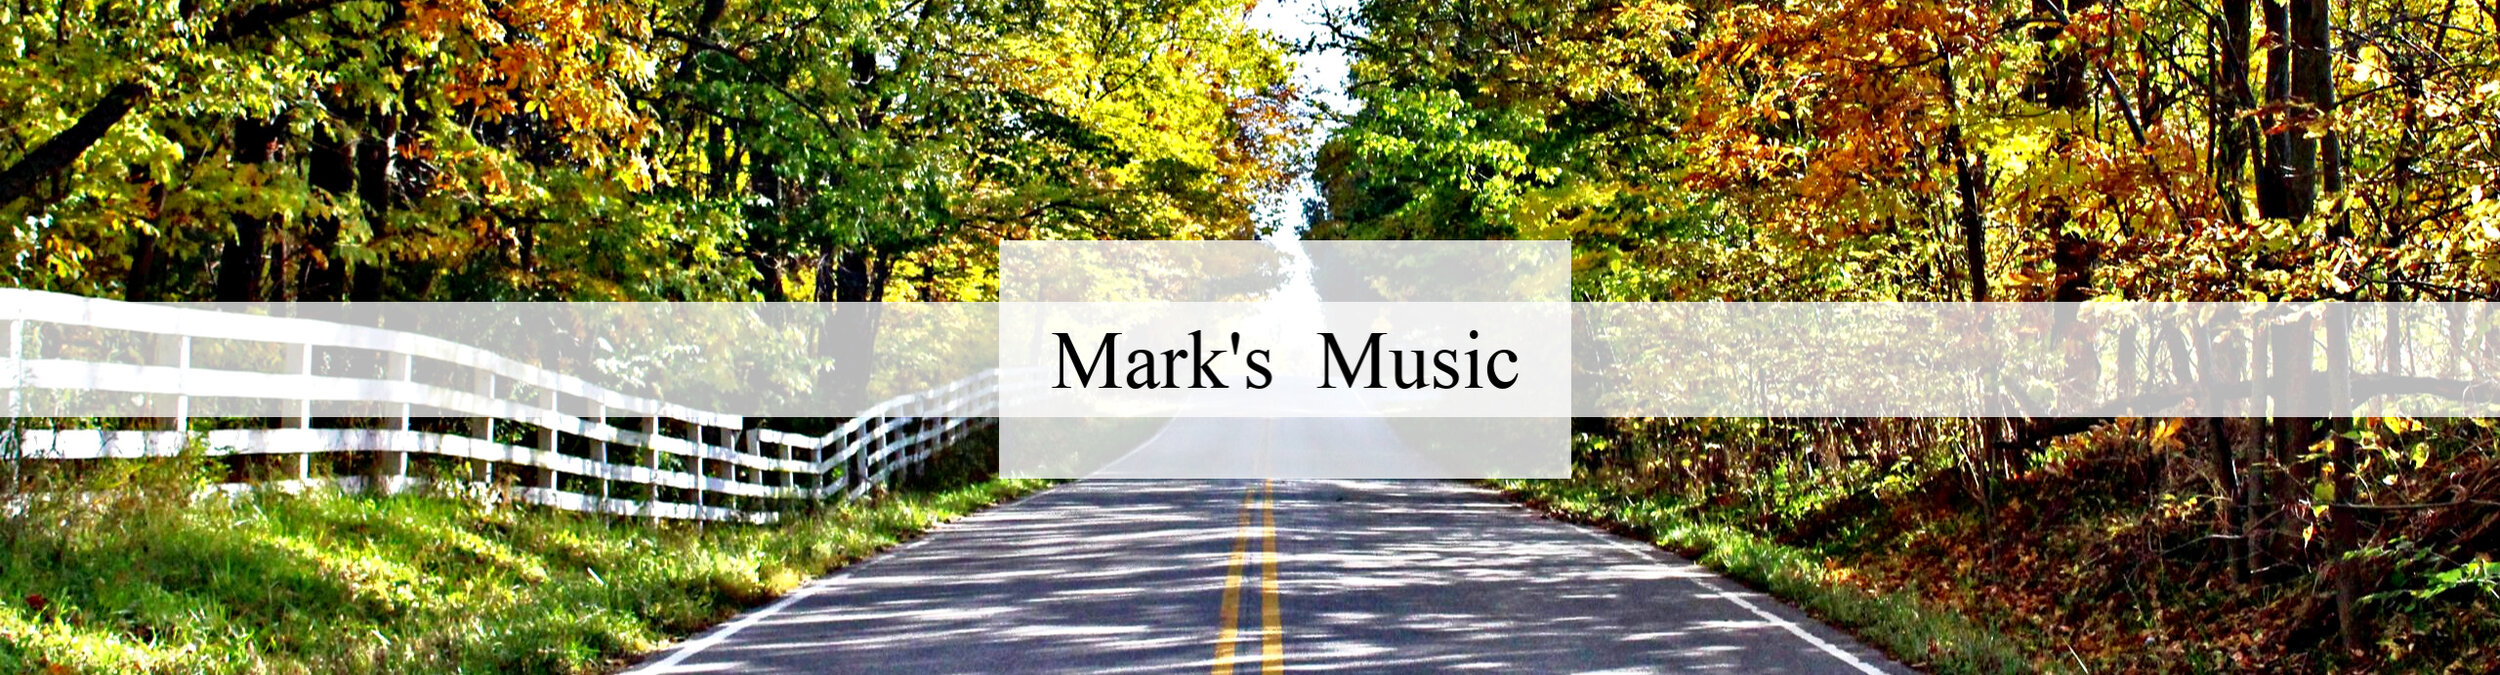 Marks Music category image.jpg